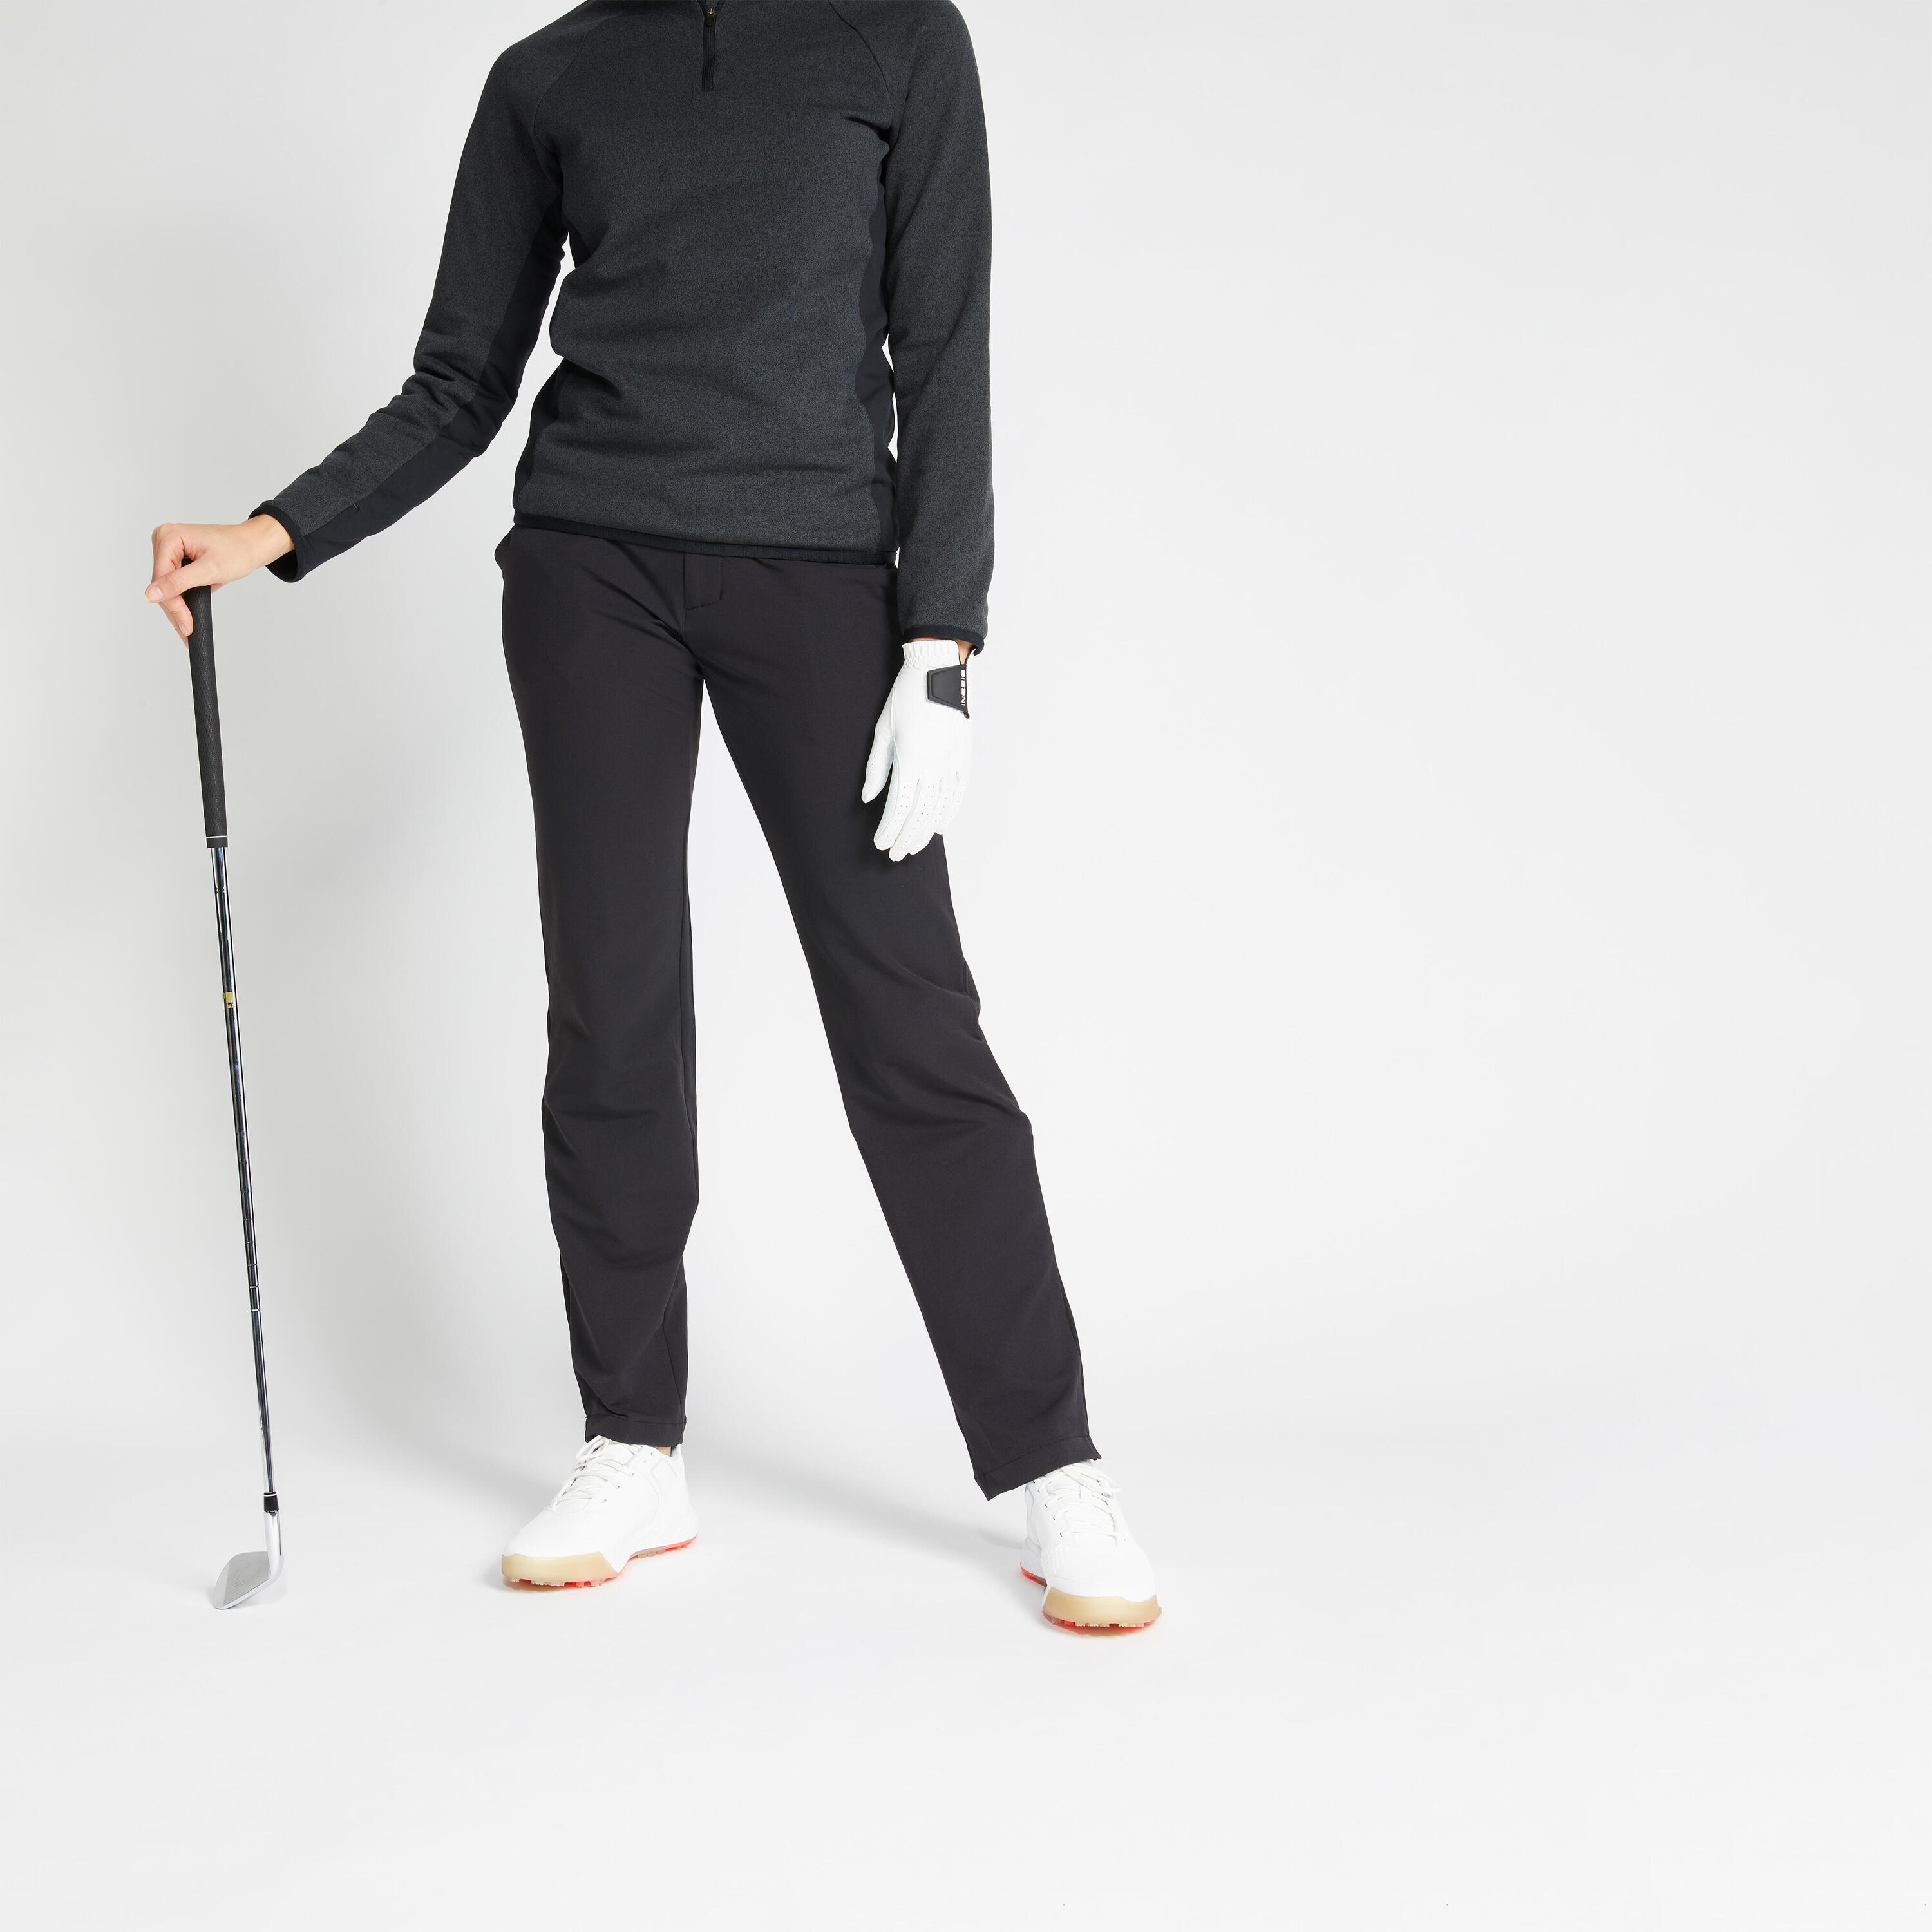 INESIS Women's golf winter trousers - CW500 black